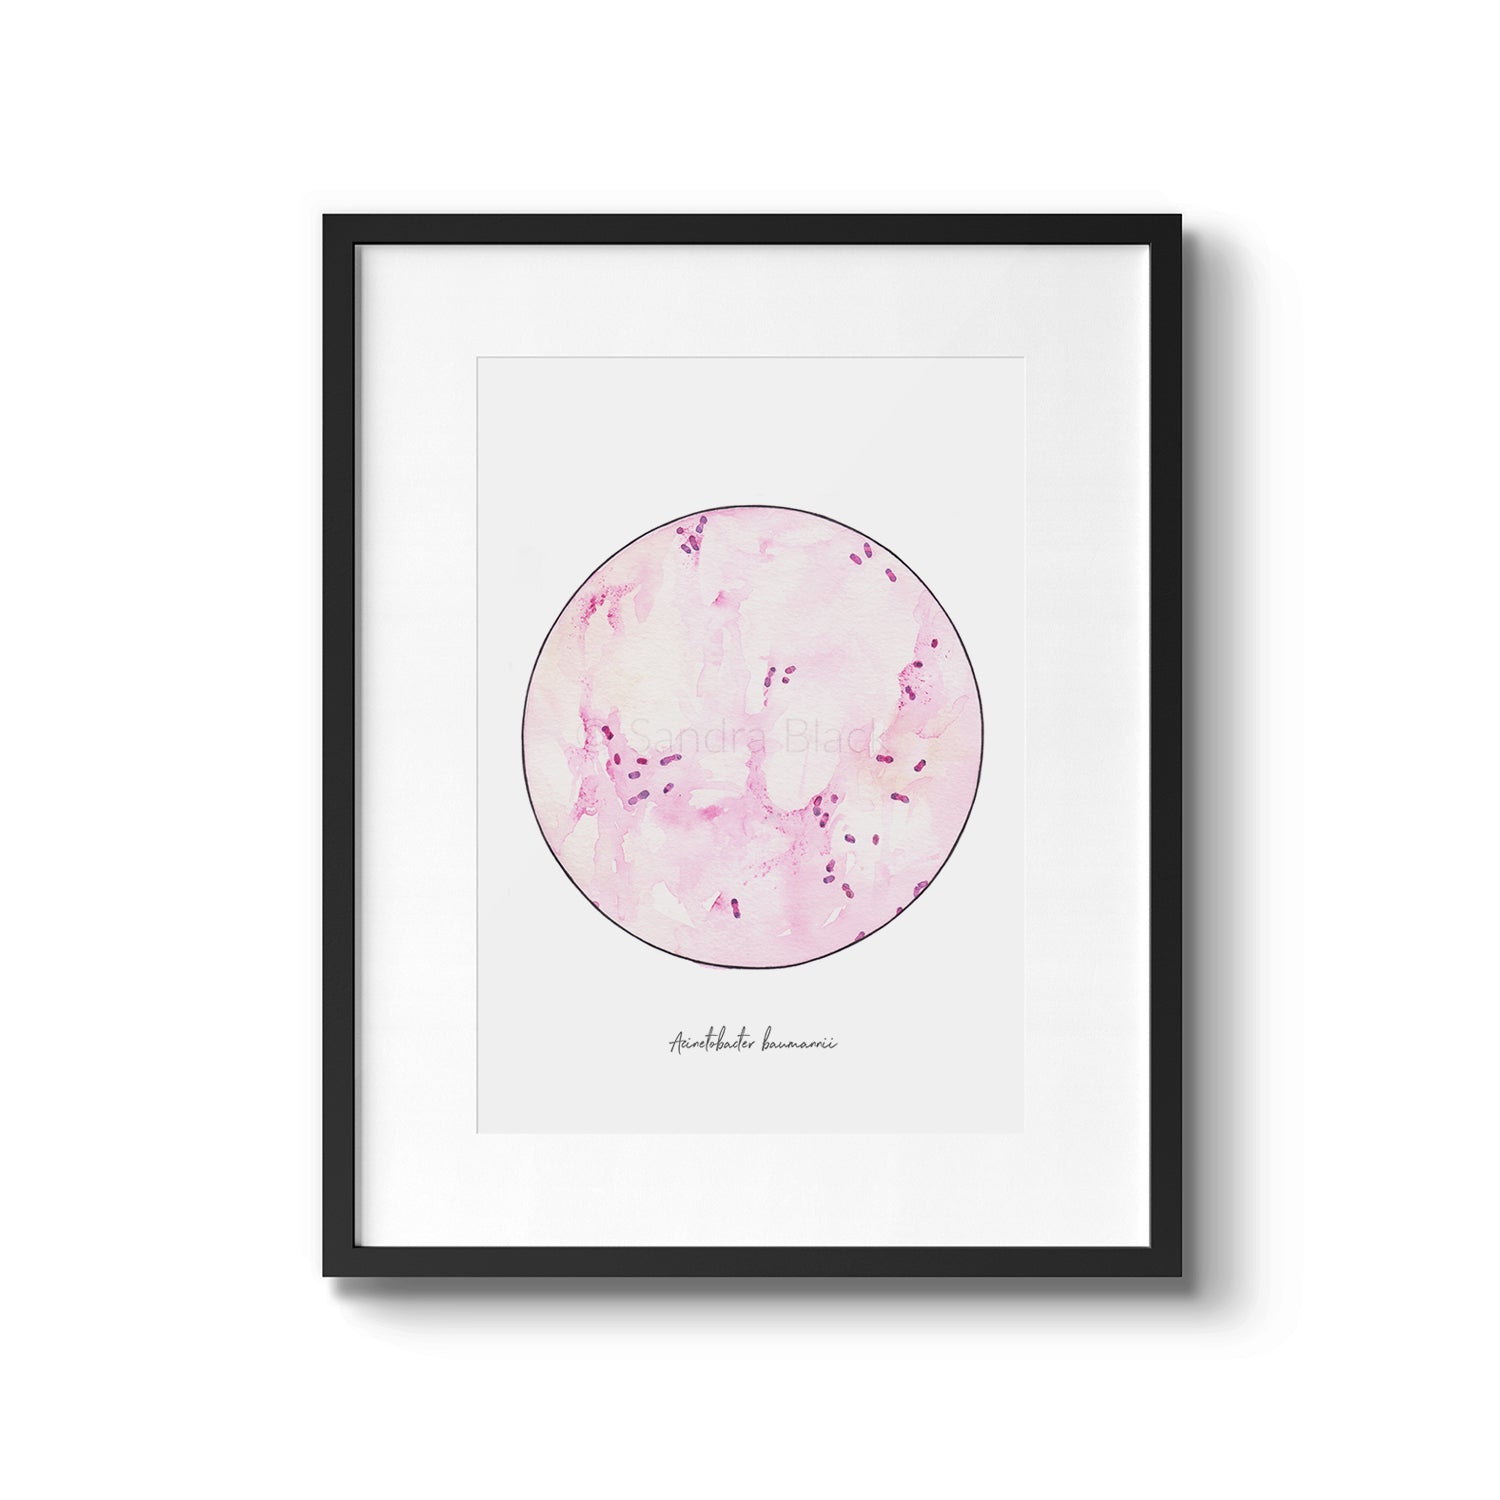 Acinetobacter baumanii fine art print